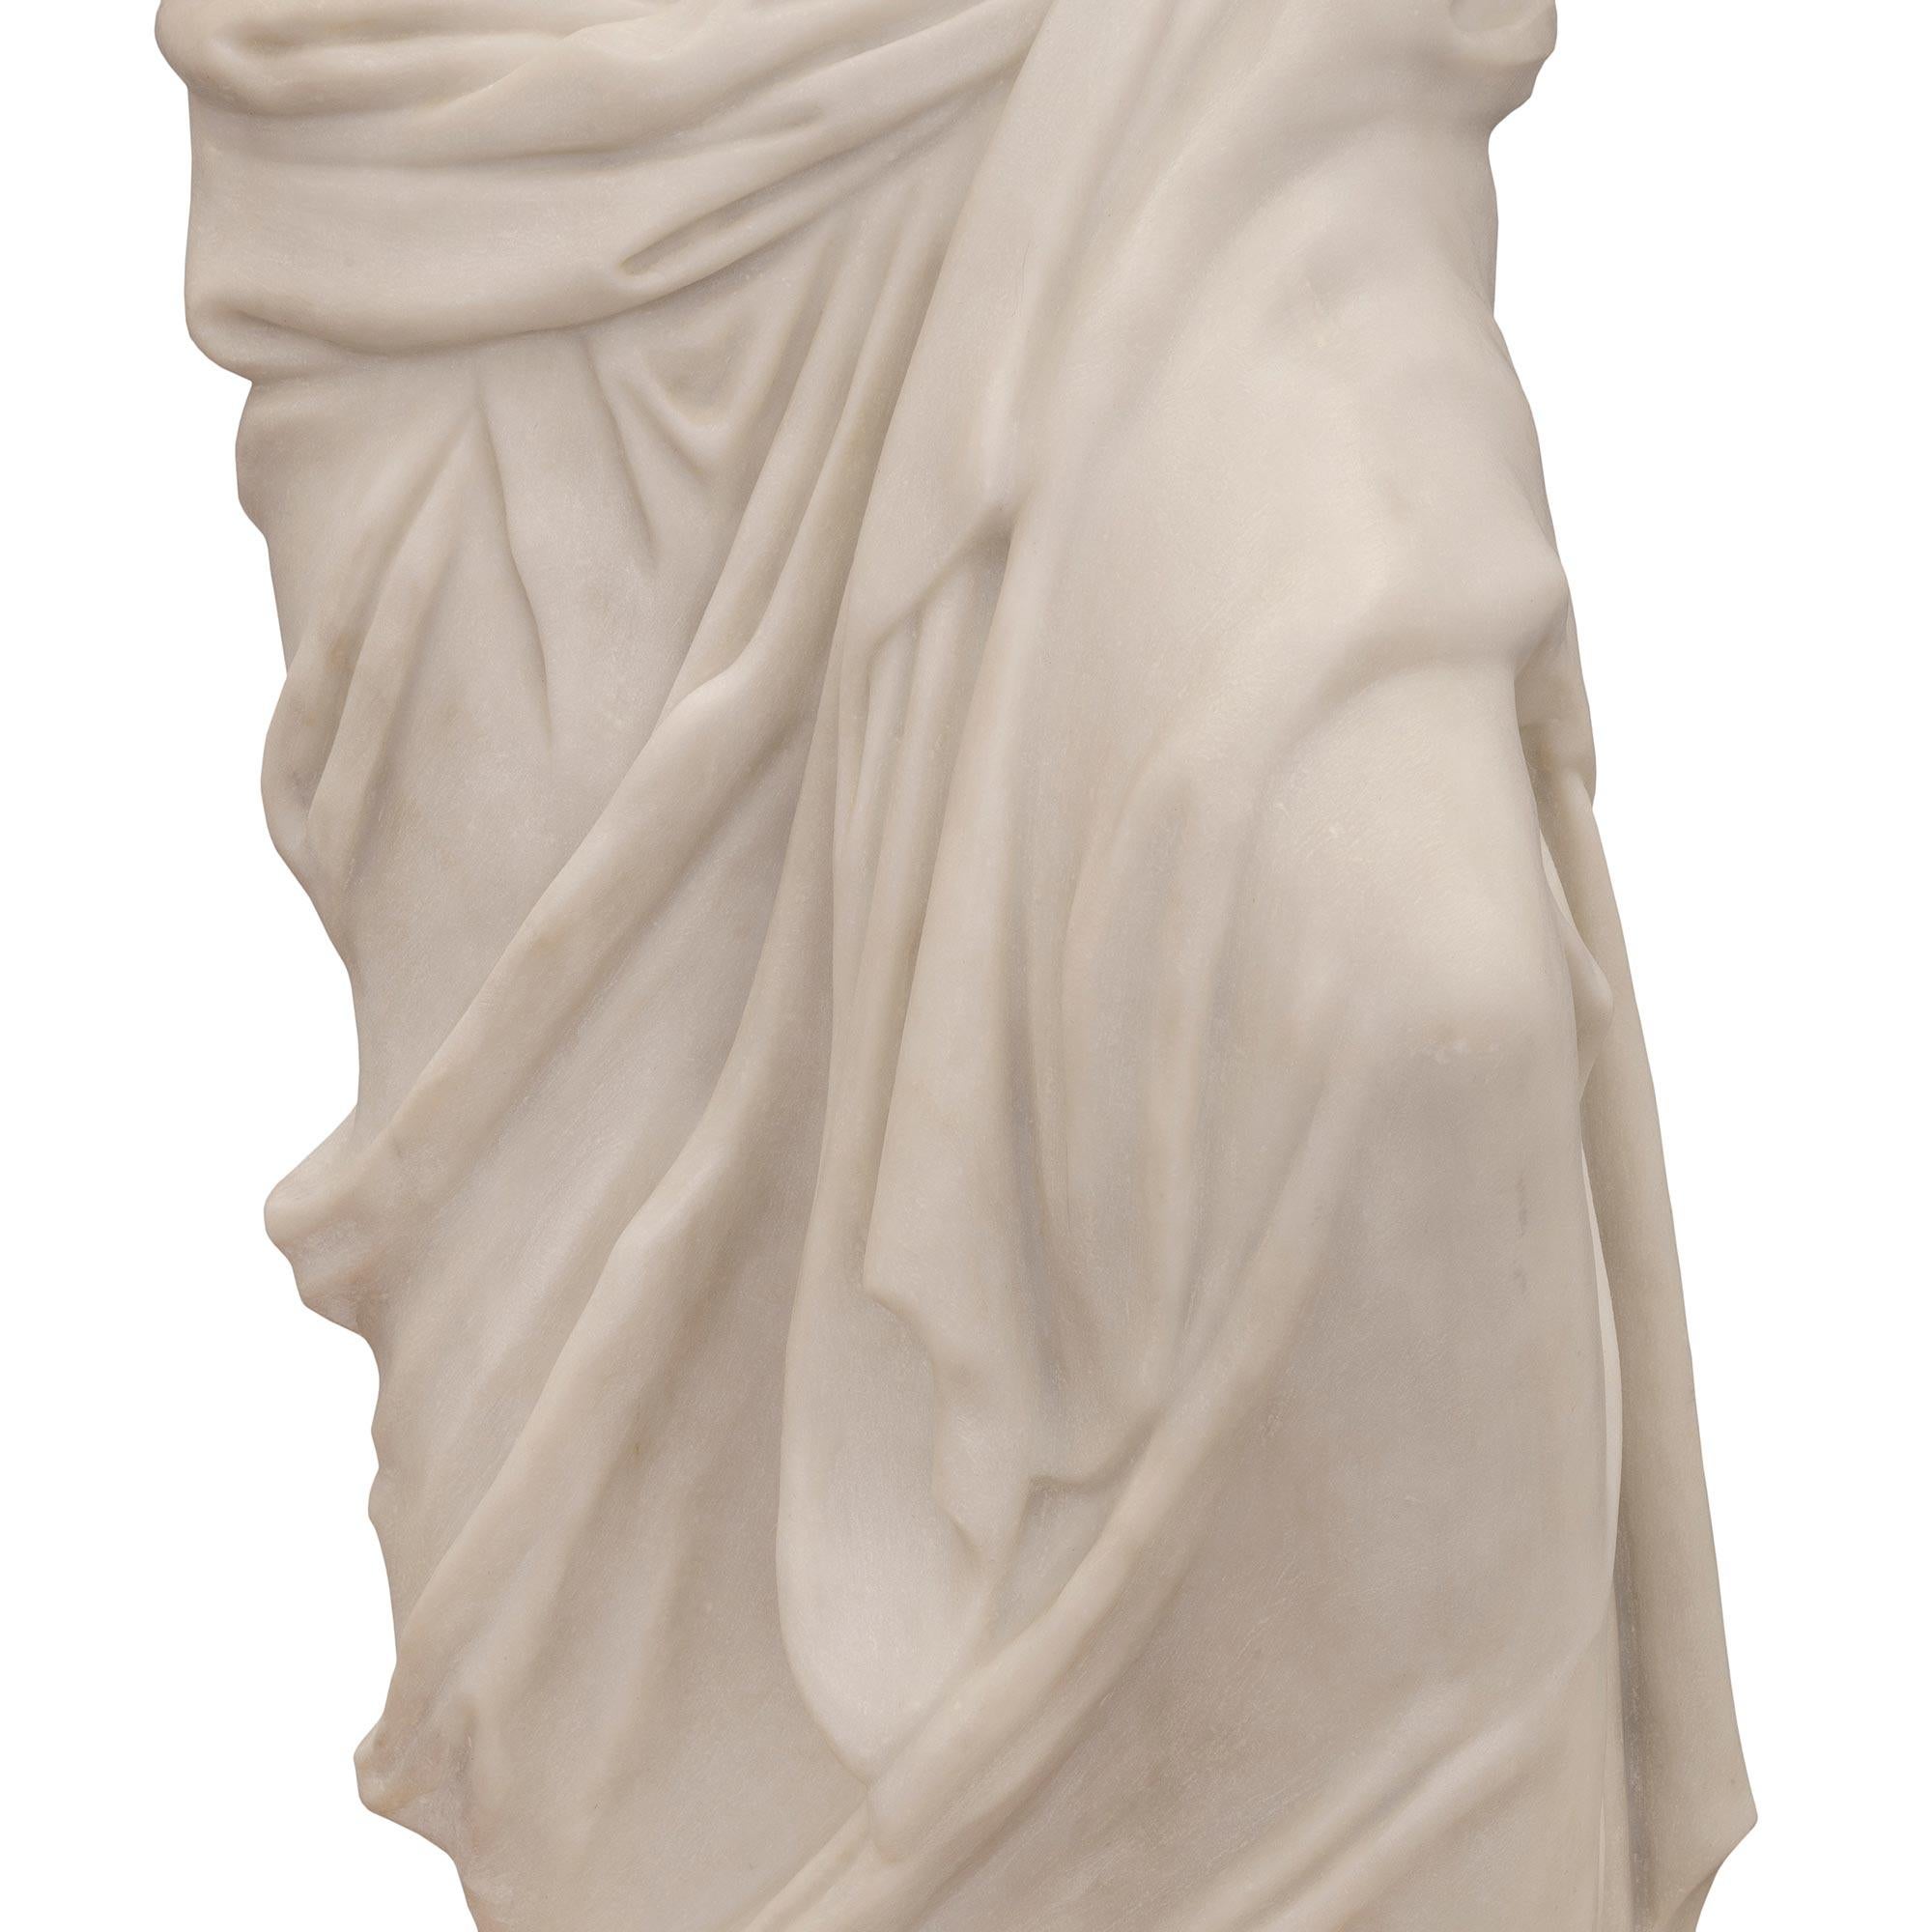 Carrara Marble Italian 19th Century Neo-Classical St. Marble Statue of Venus De Milo For Sale